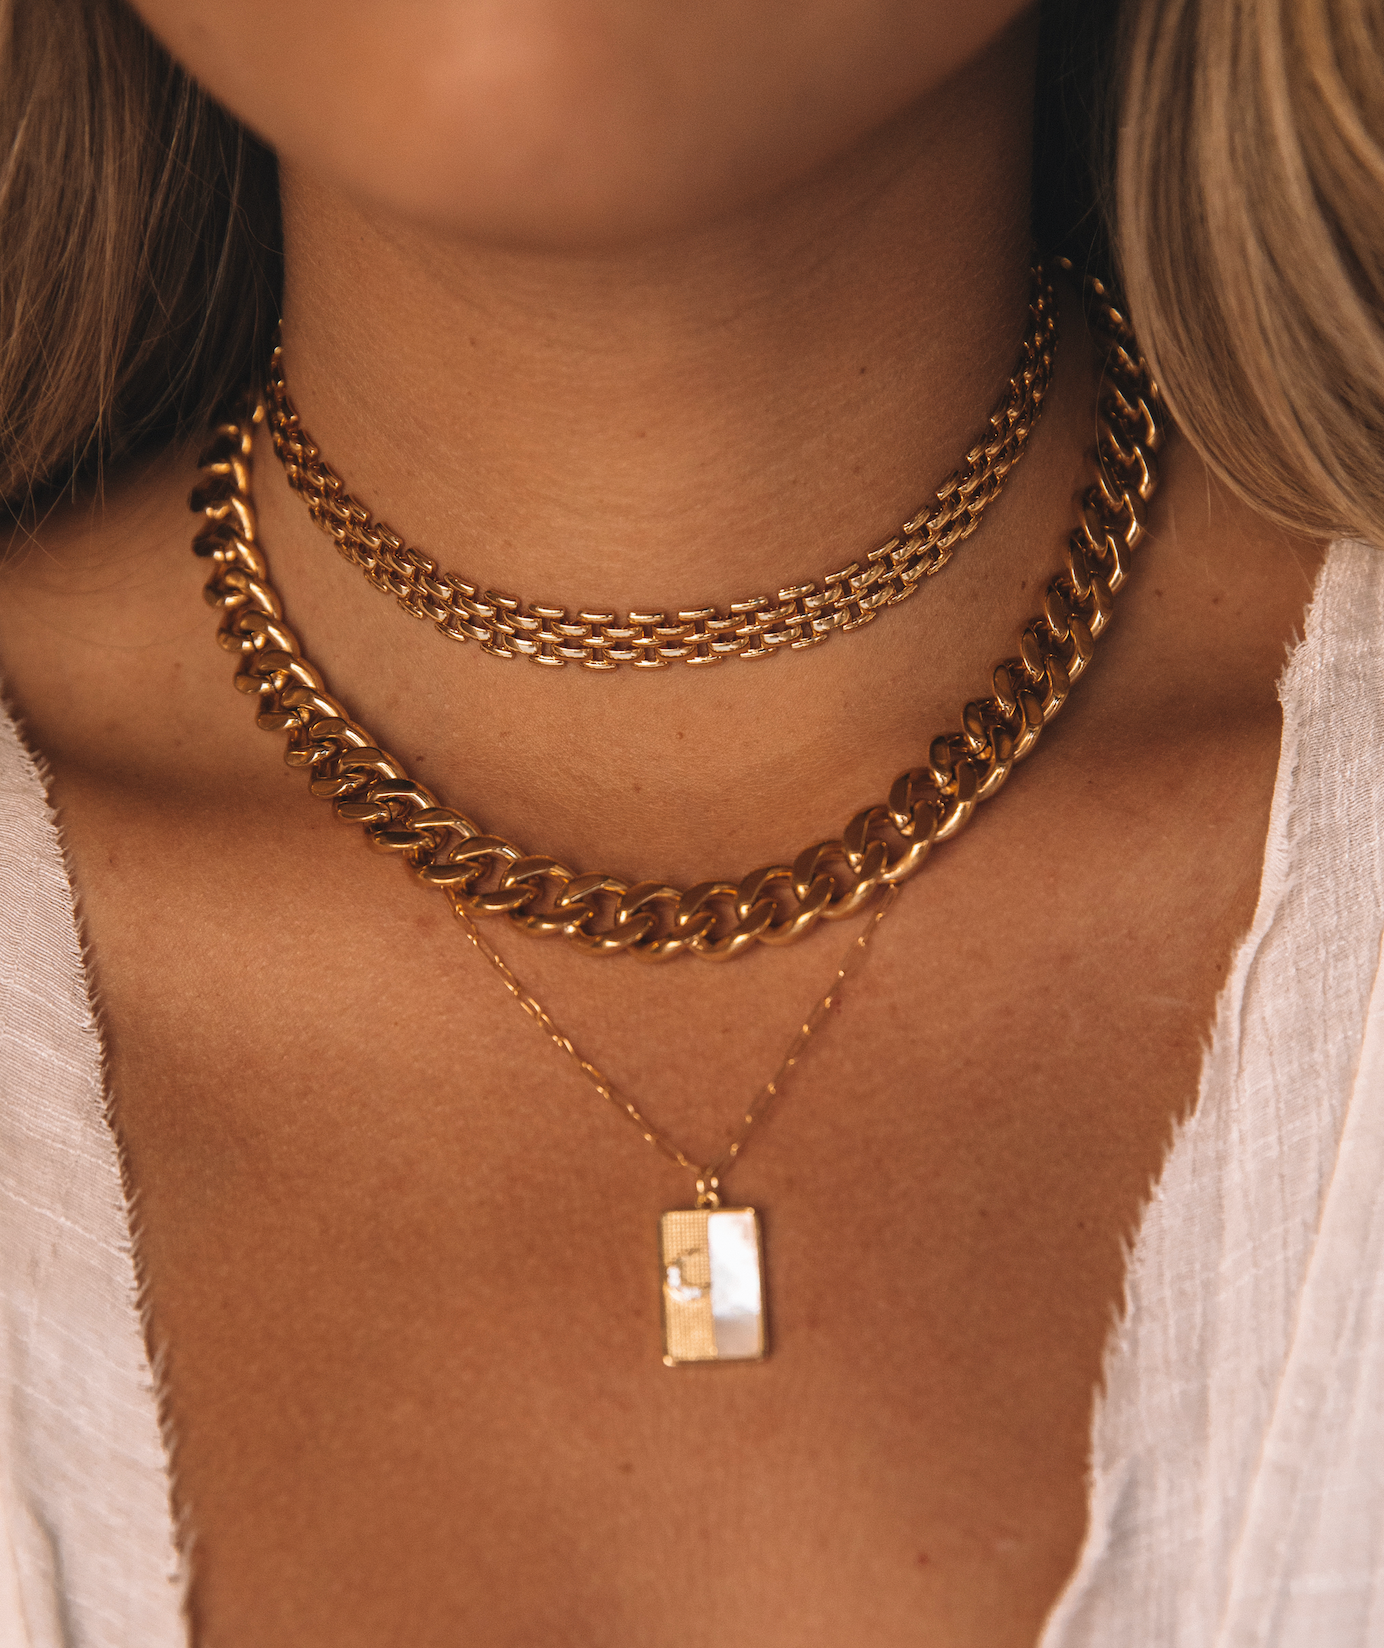 The XL Cuban Necklace